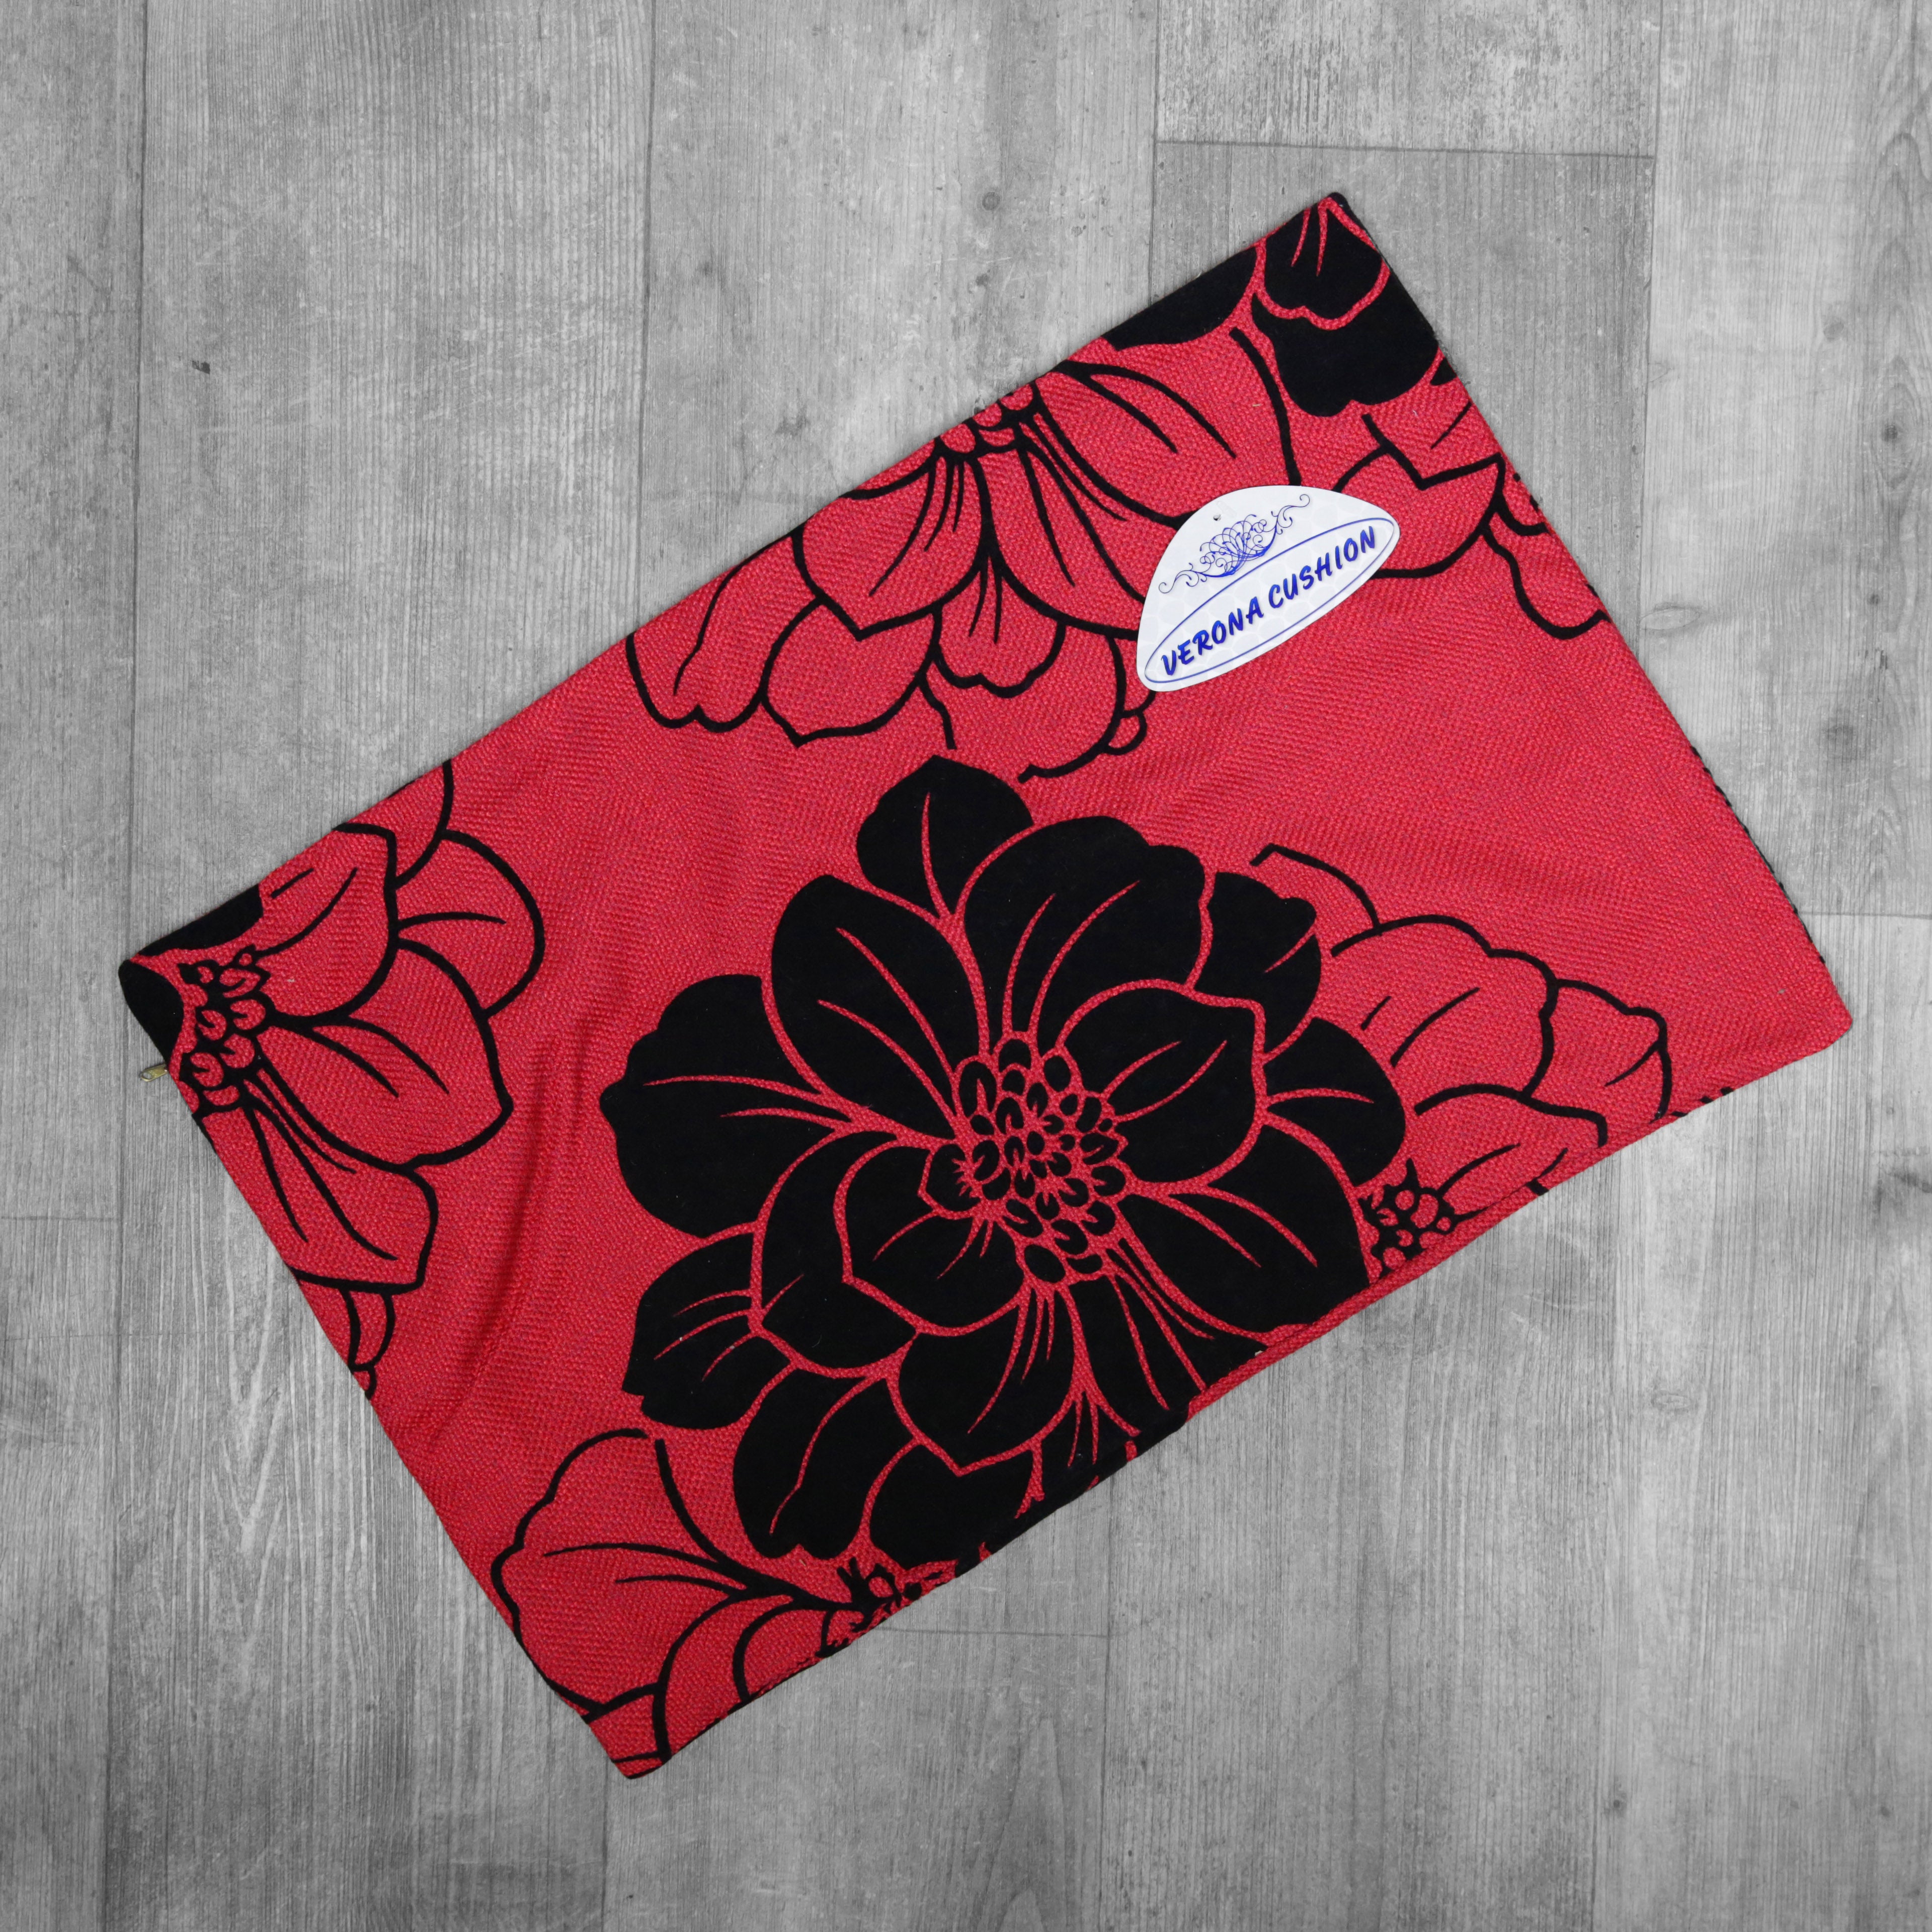 Verona Cushion Cover - Red/Black Flowers - 60 x 40cm